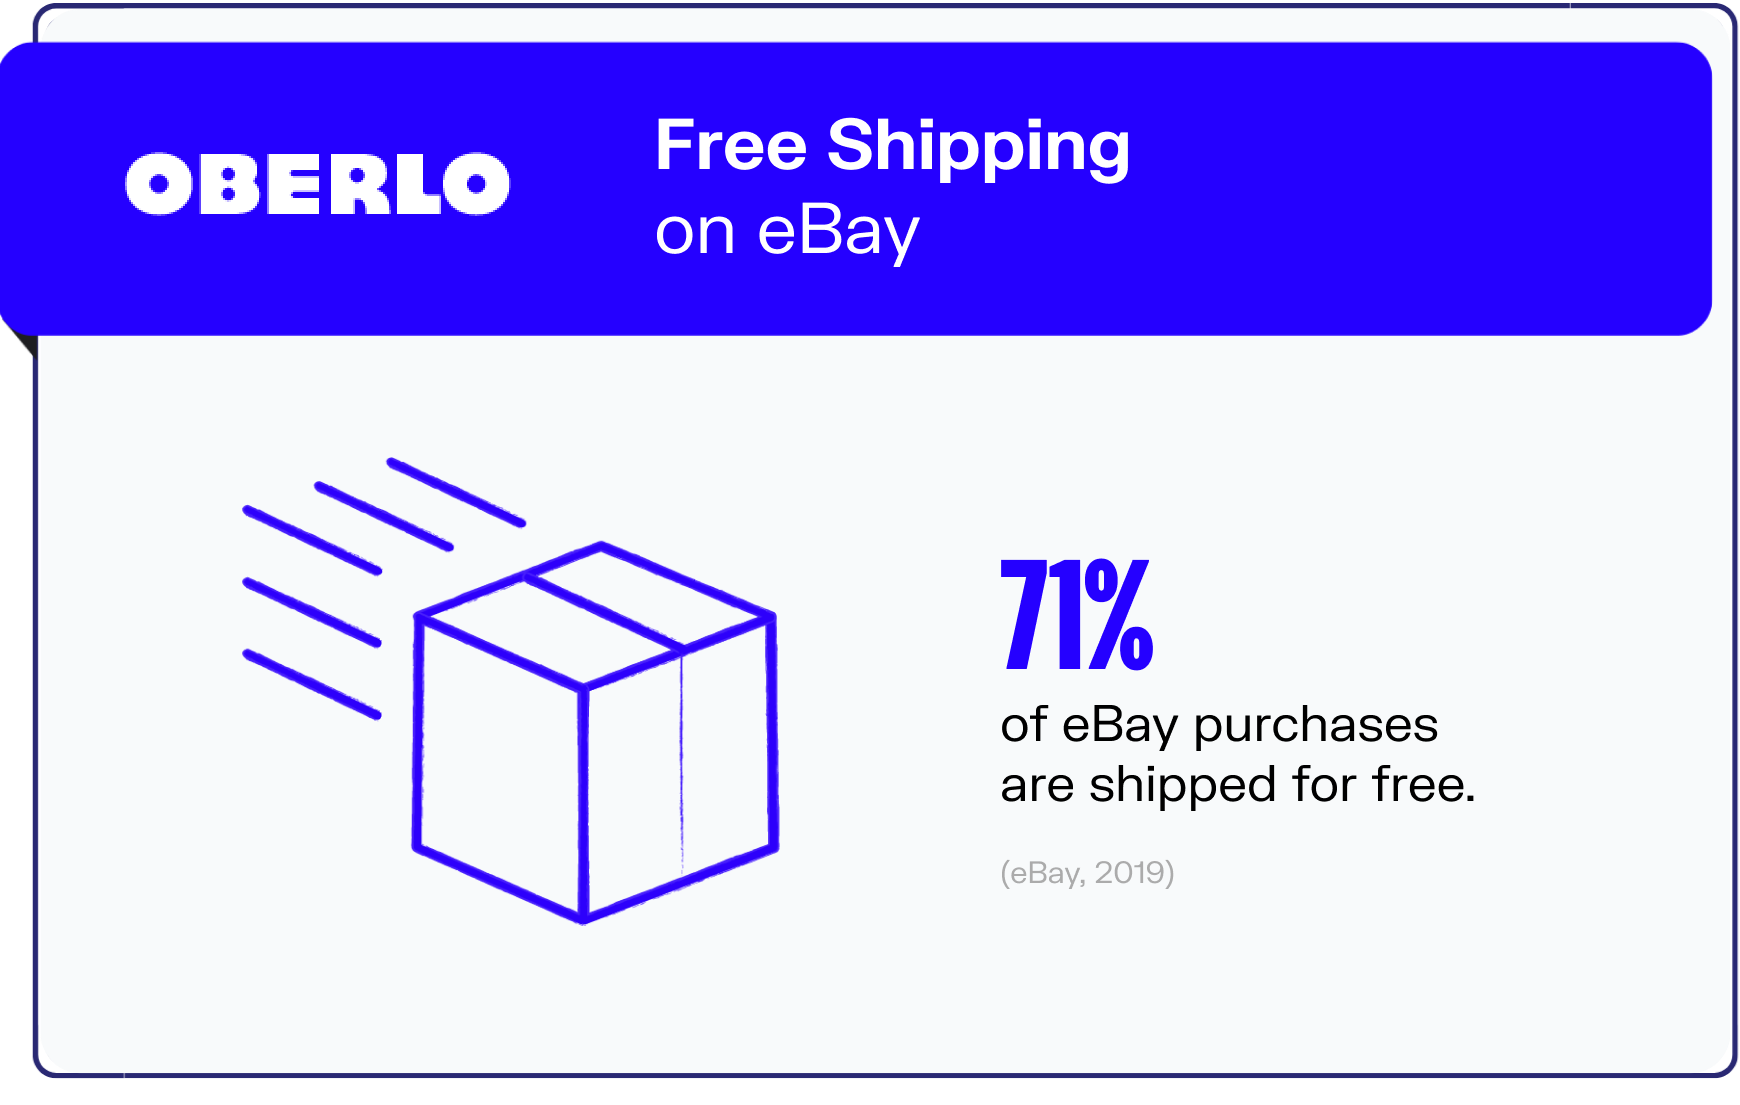 ebay statistics graphic8